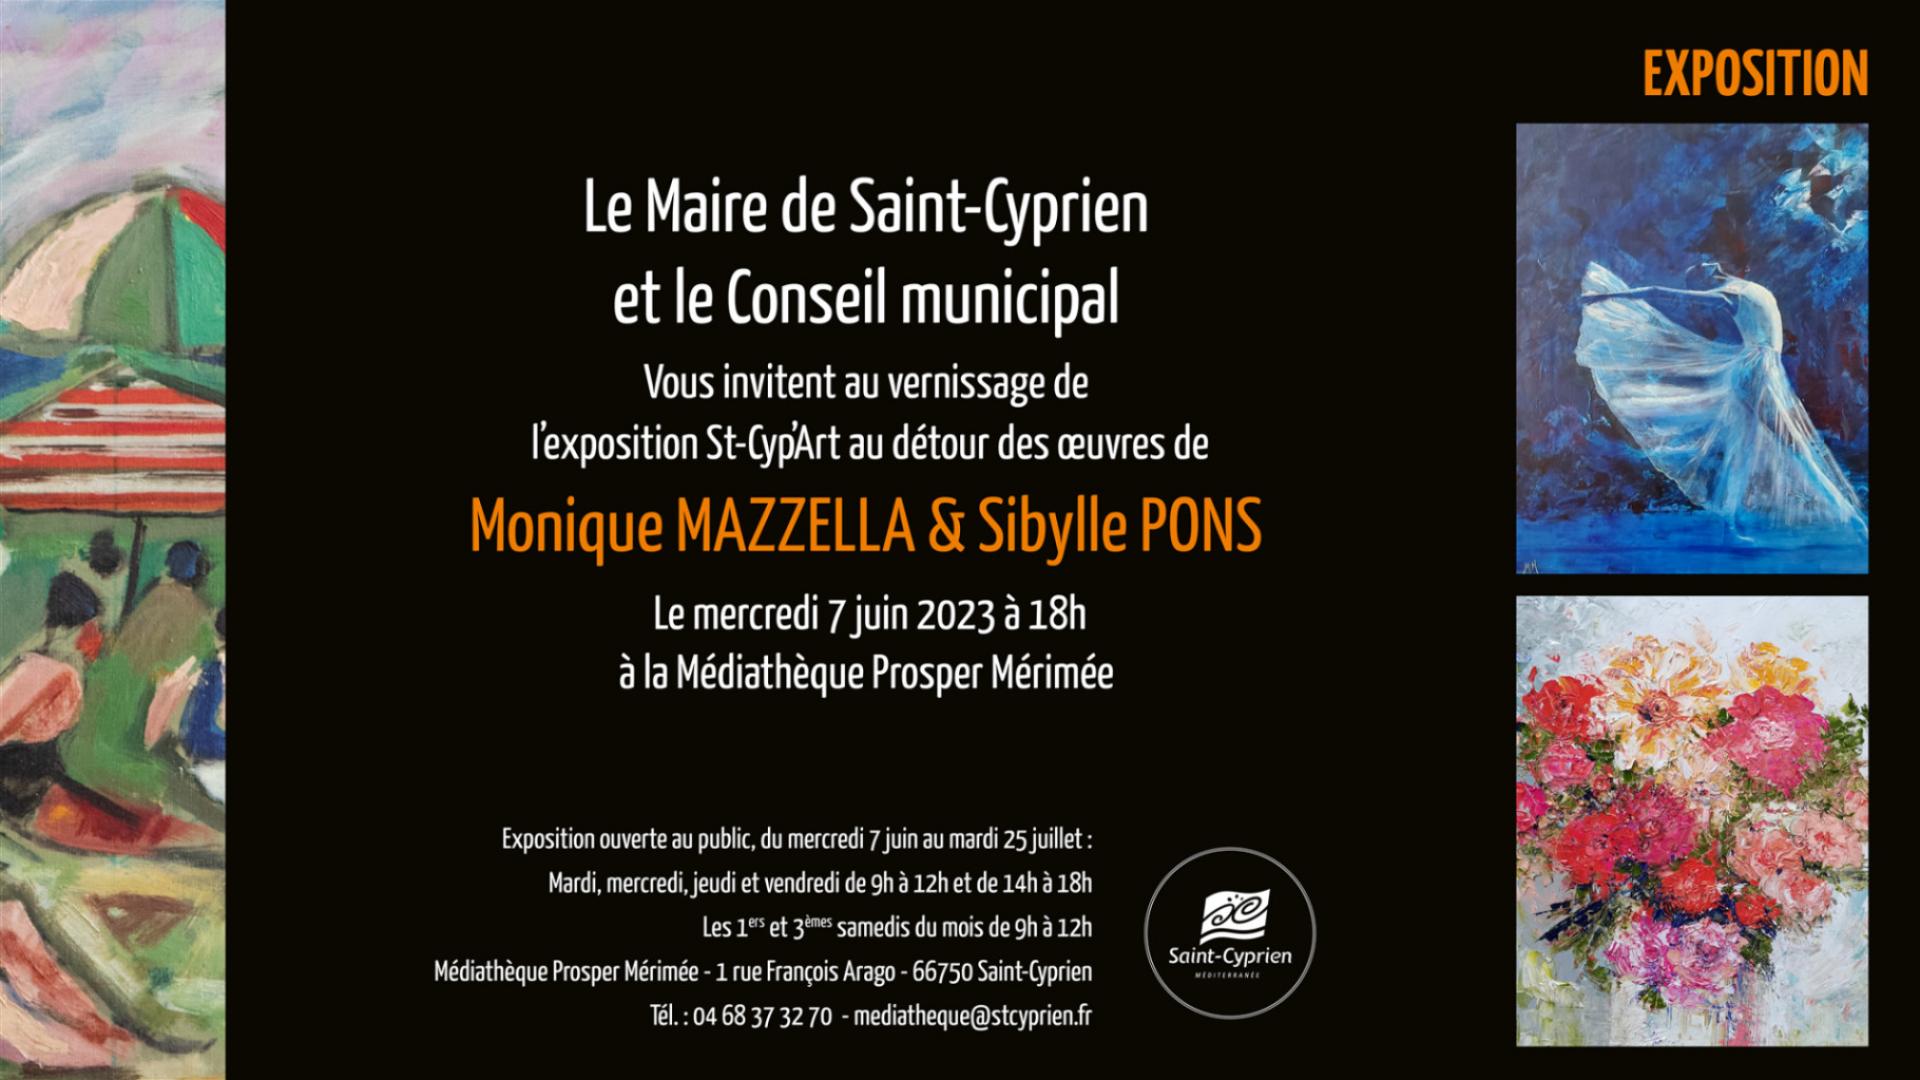 ST-CYP'ART - EXPOSITION MONICA MAZELLA - SIBYLLE PONS